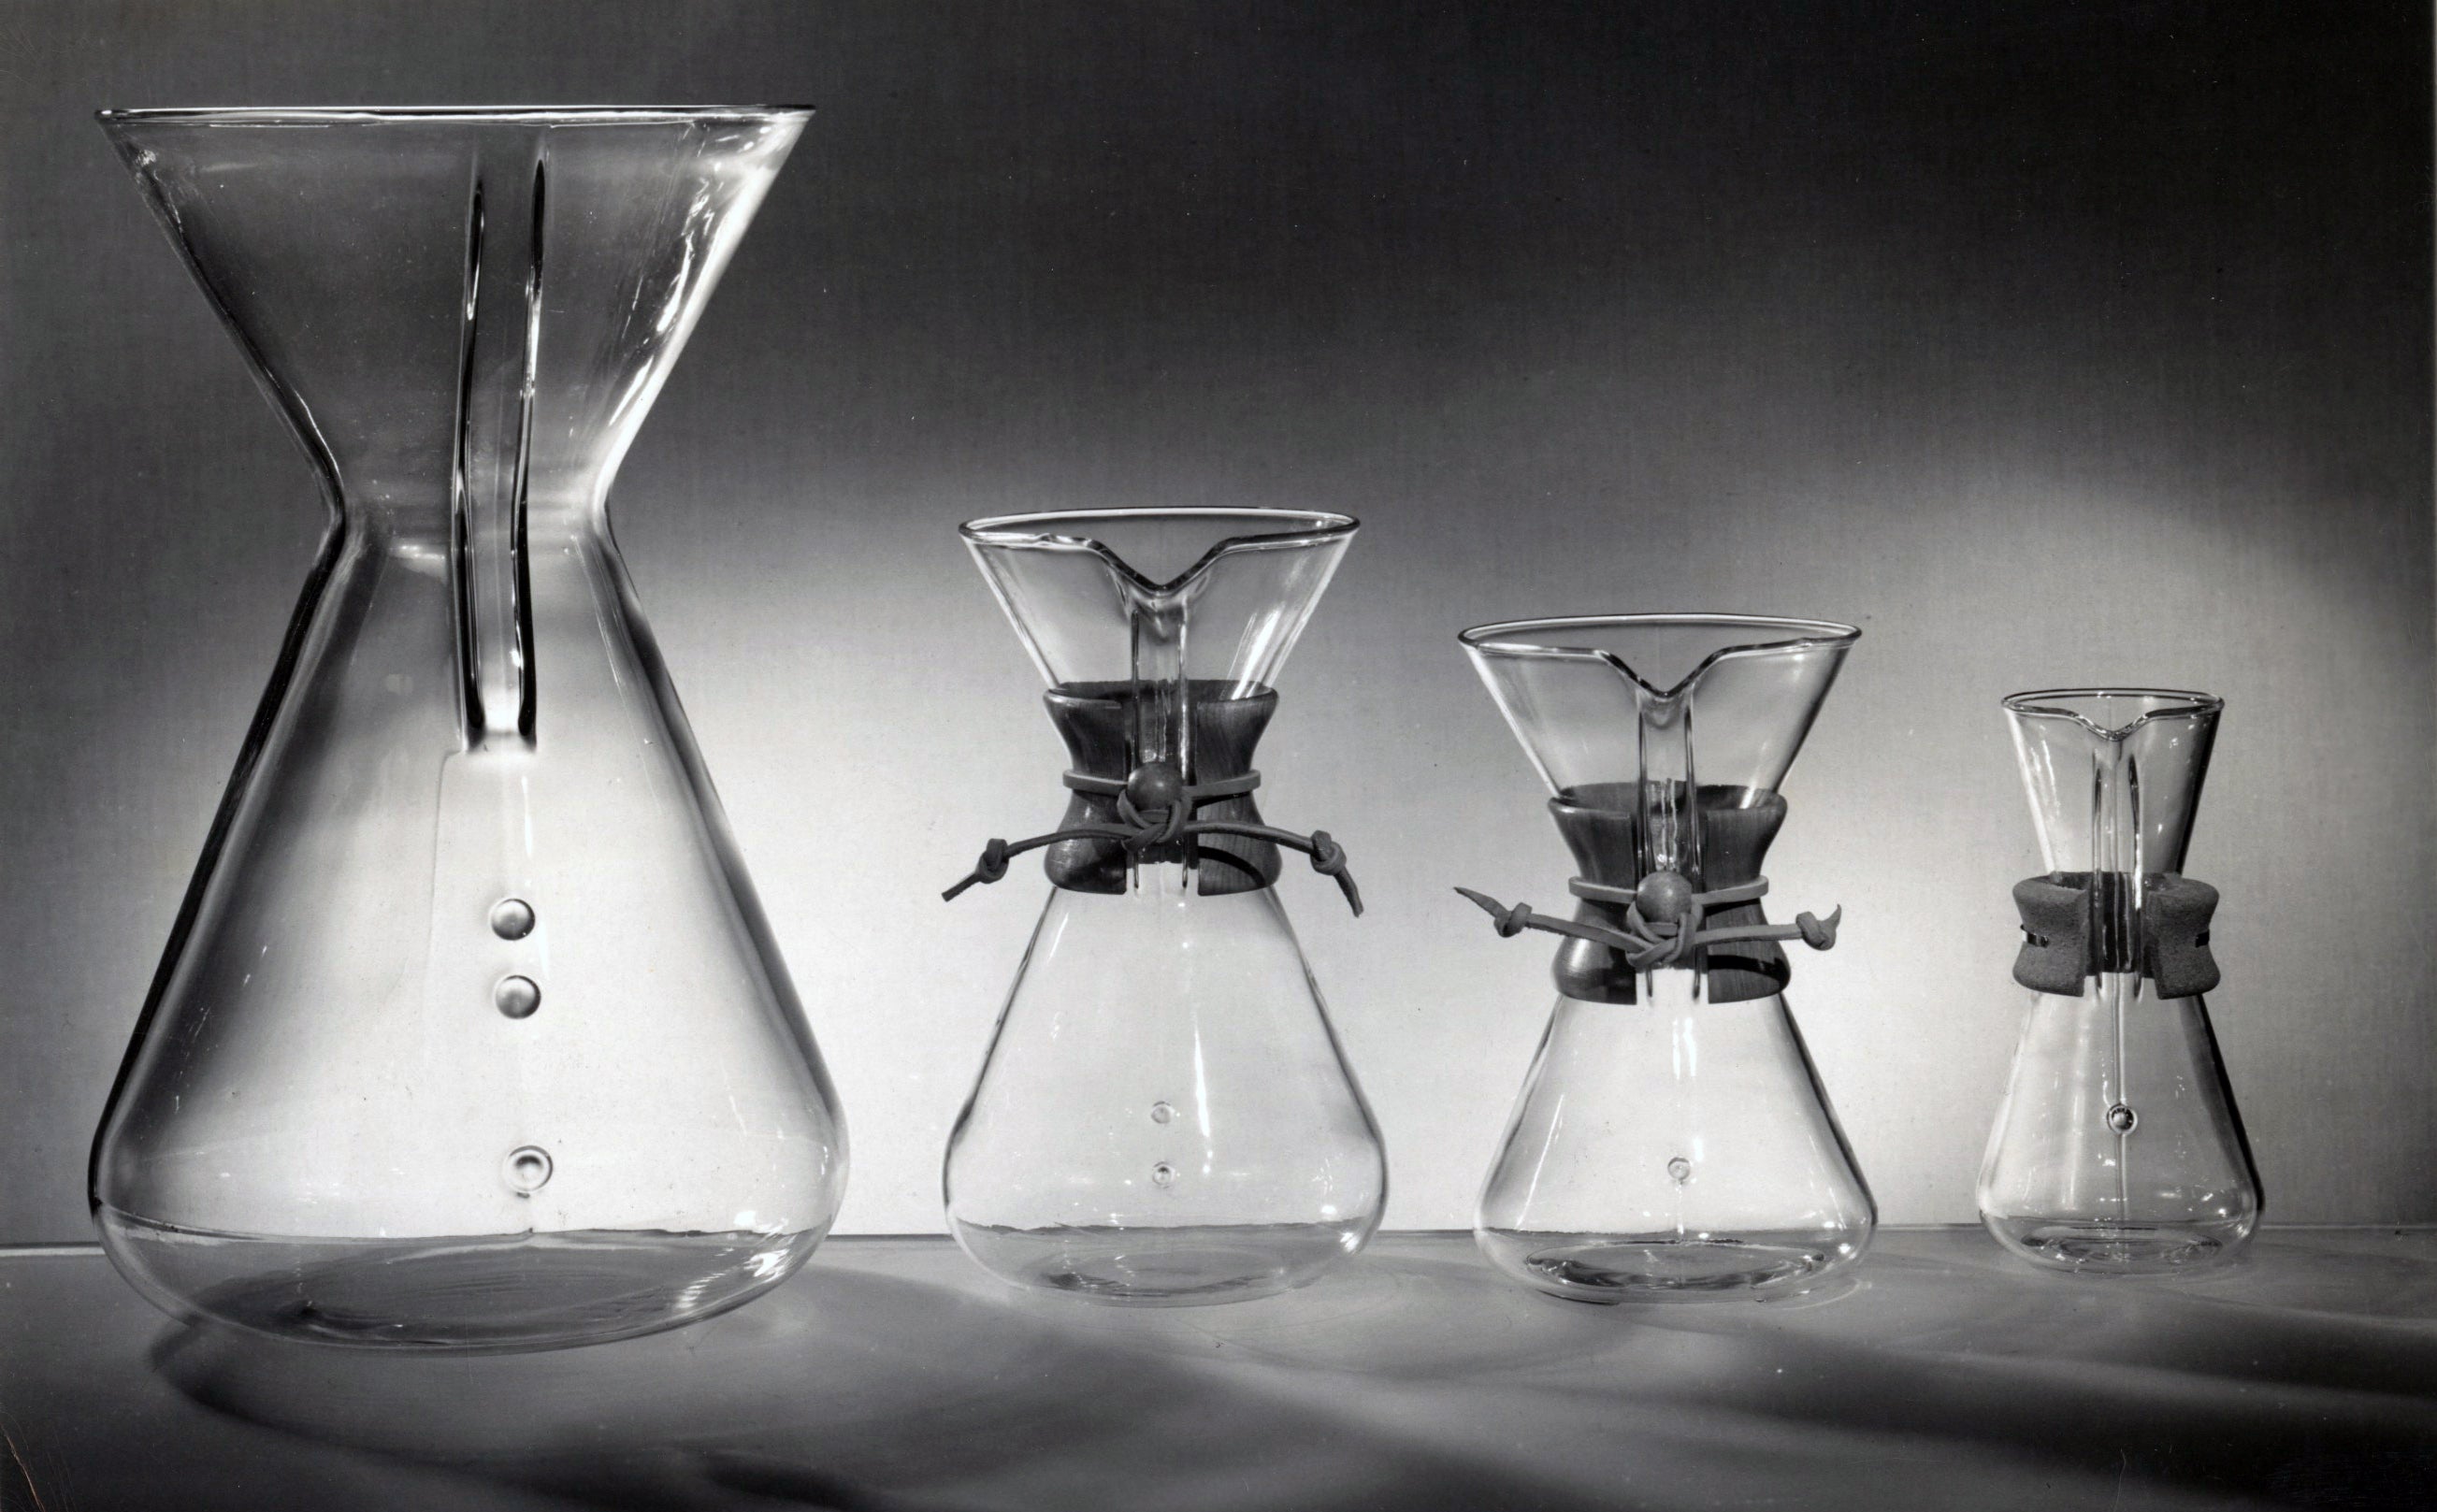 History of the Iconic Chemex Coffeemaker